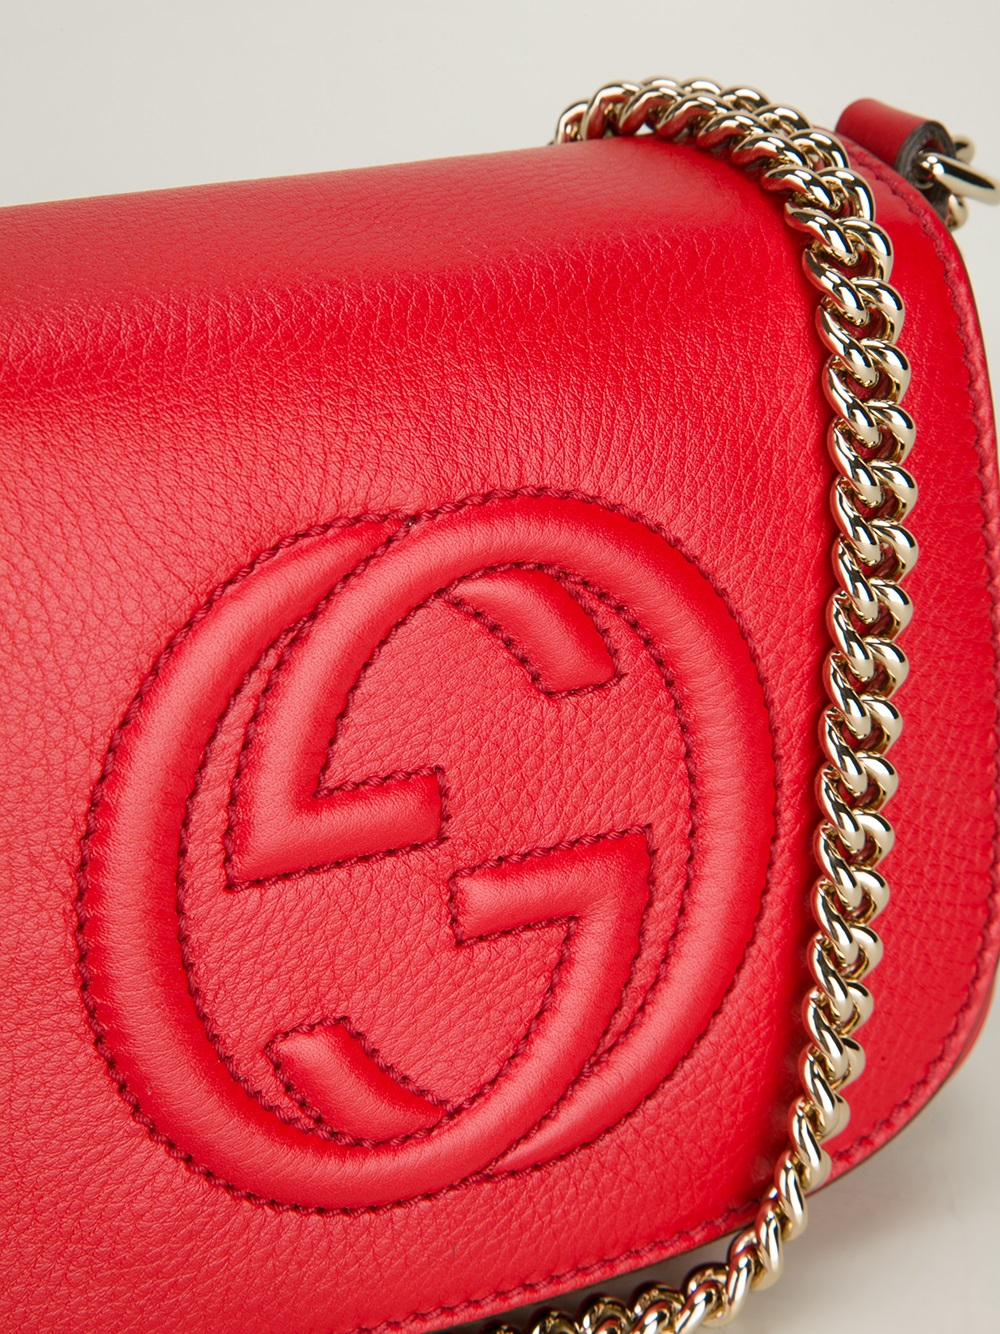 Gucci Soho Interlocking GG Red Leather Chain Flap Shoulder Bag Handbag